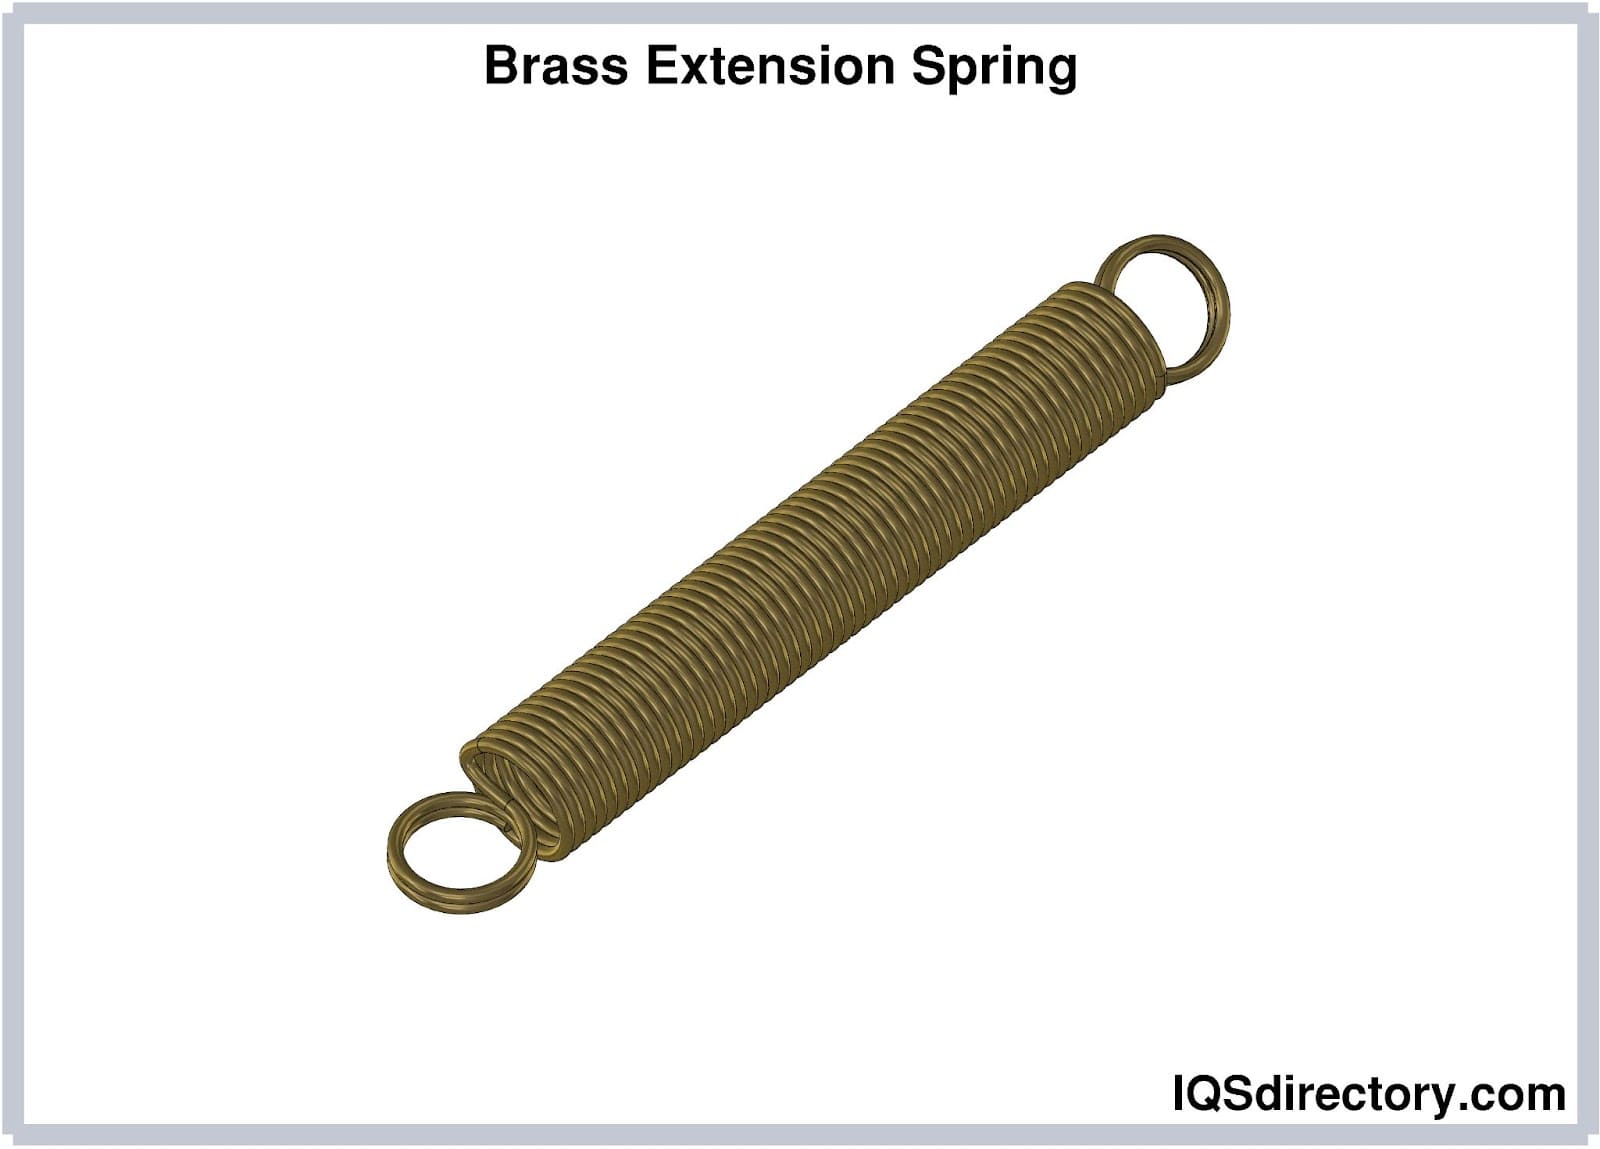 Brass Extension Spring